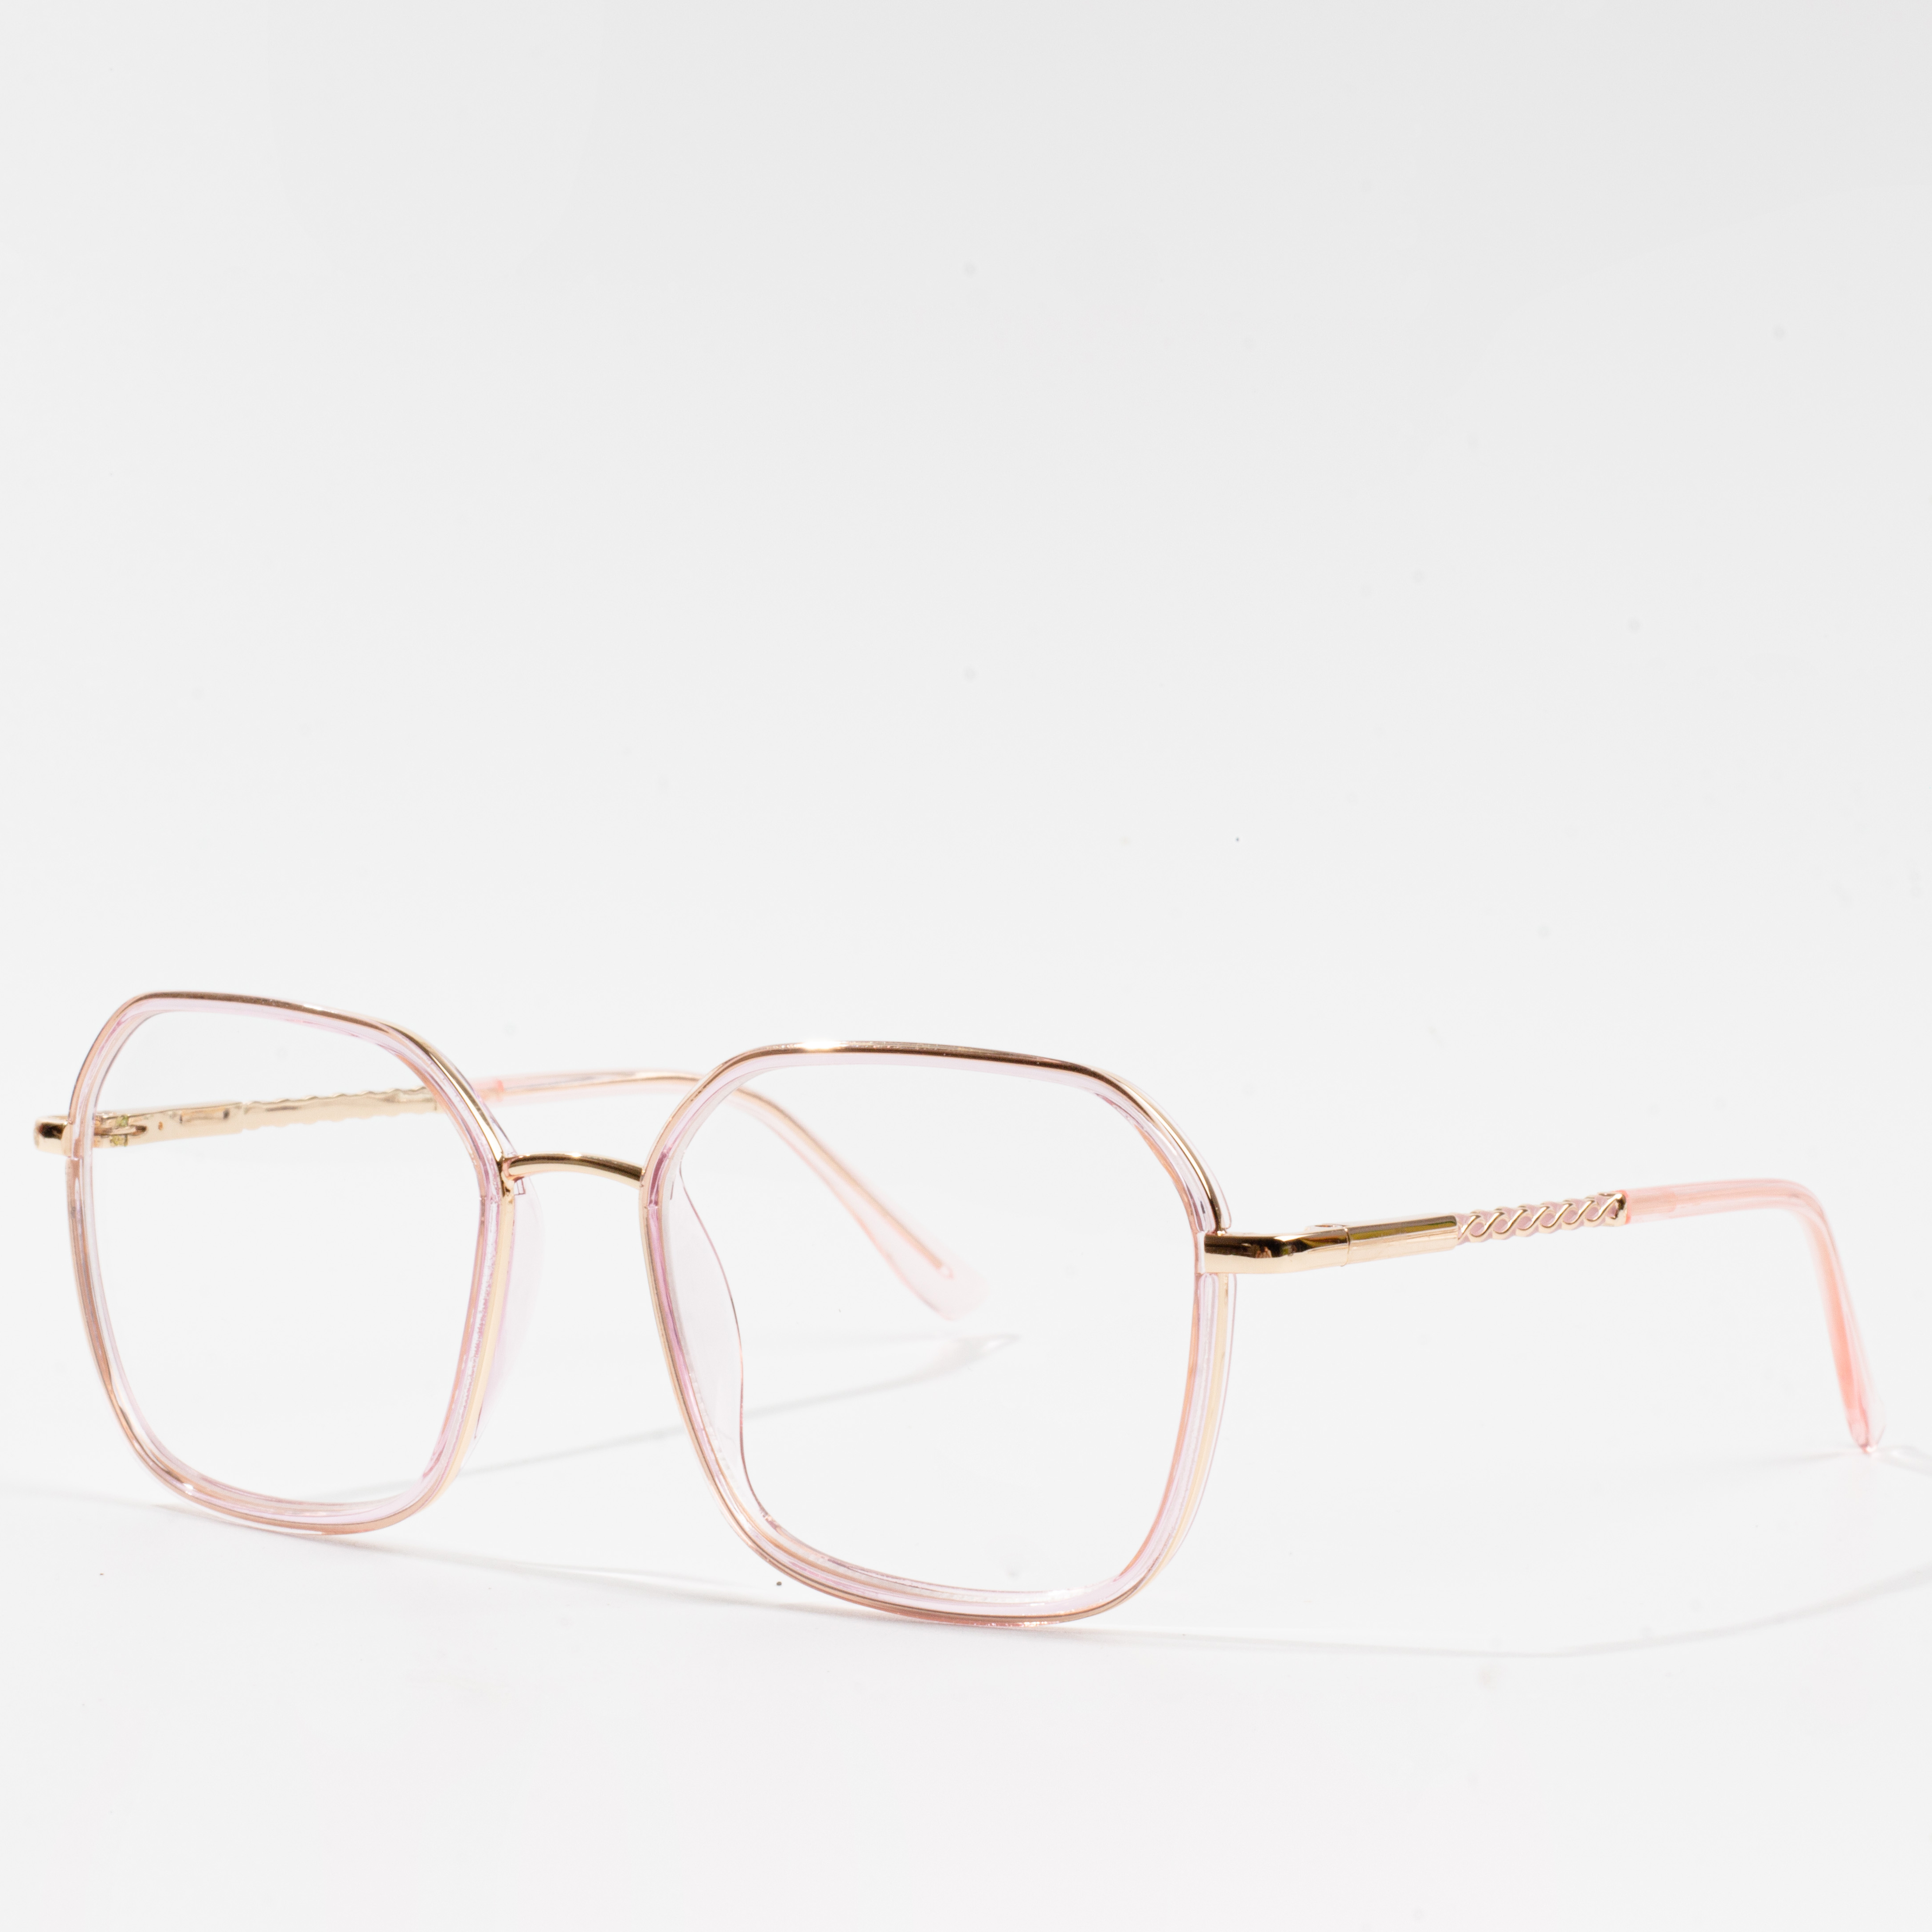 bril frame foar rûn gesicht